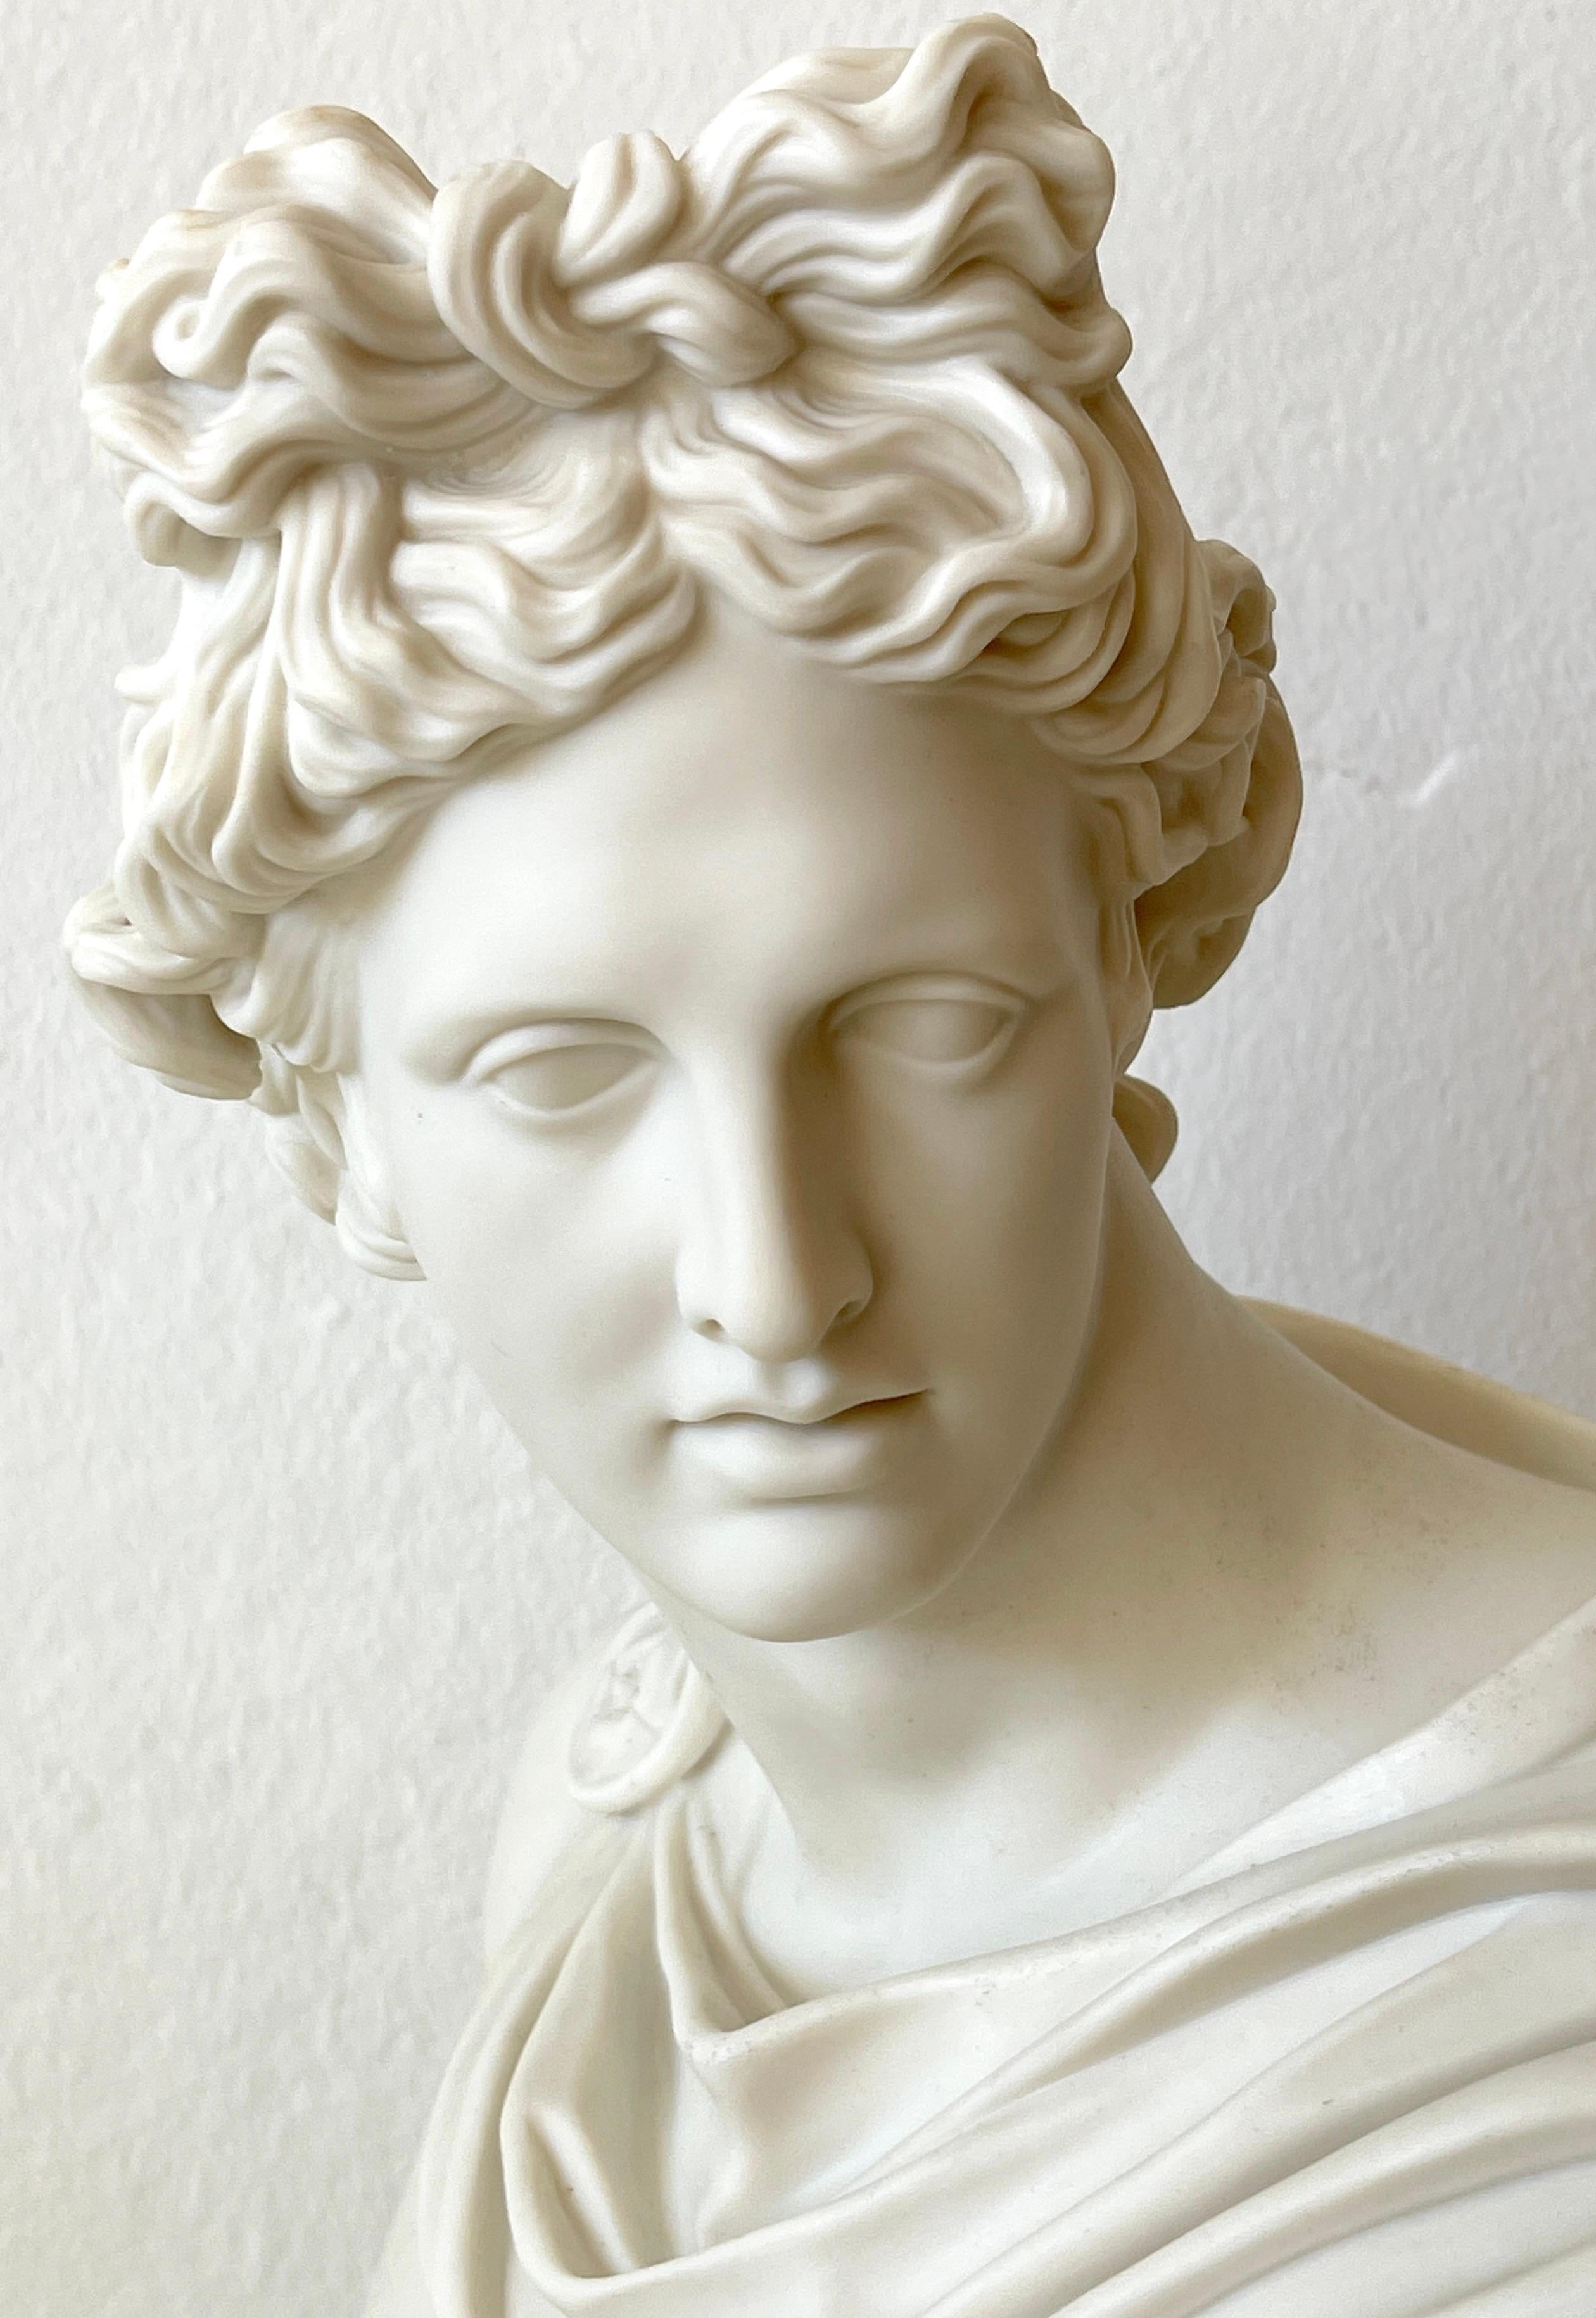 Art Union of London Parian Bust of Apollo Belvedere, by C. Delpech, 1861 8